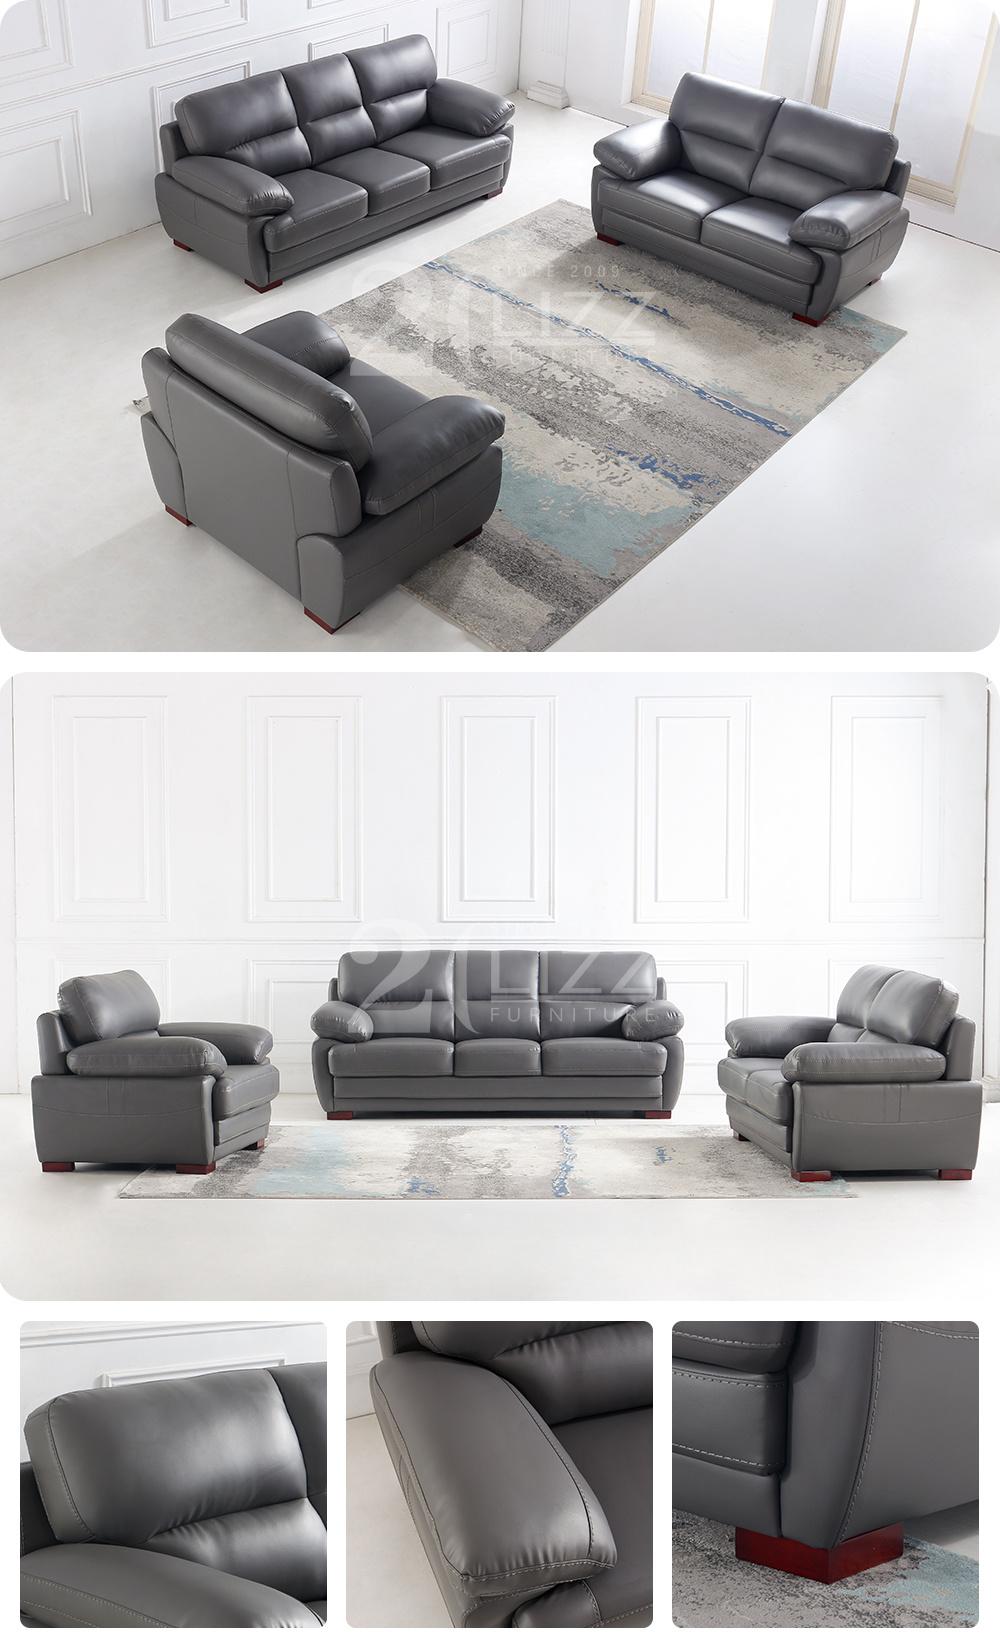 Comfortable Moder Furniture /Home /Living Room Leather Sofa Sets